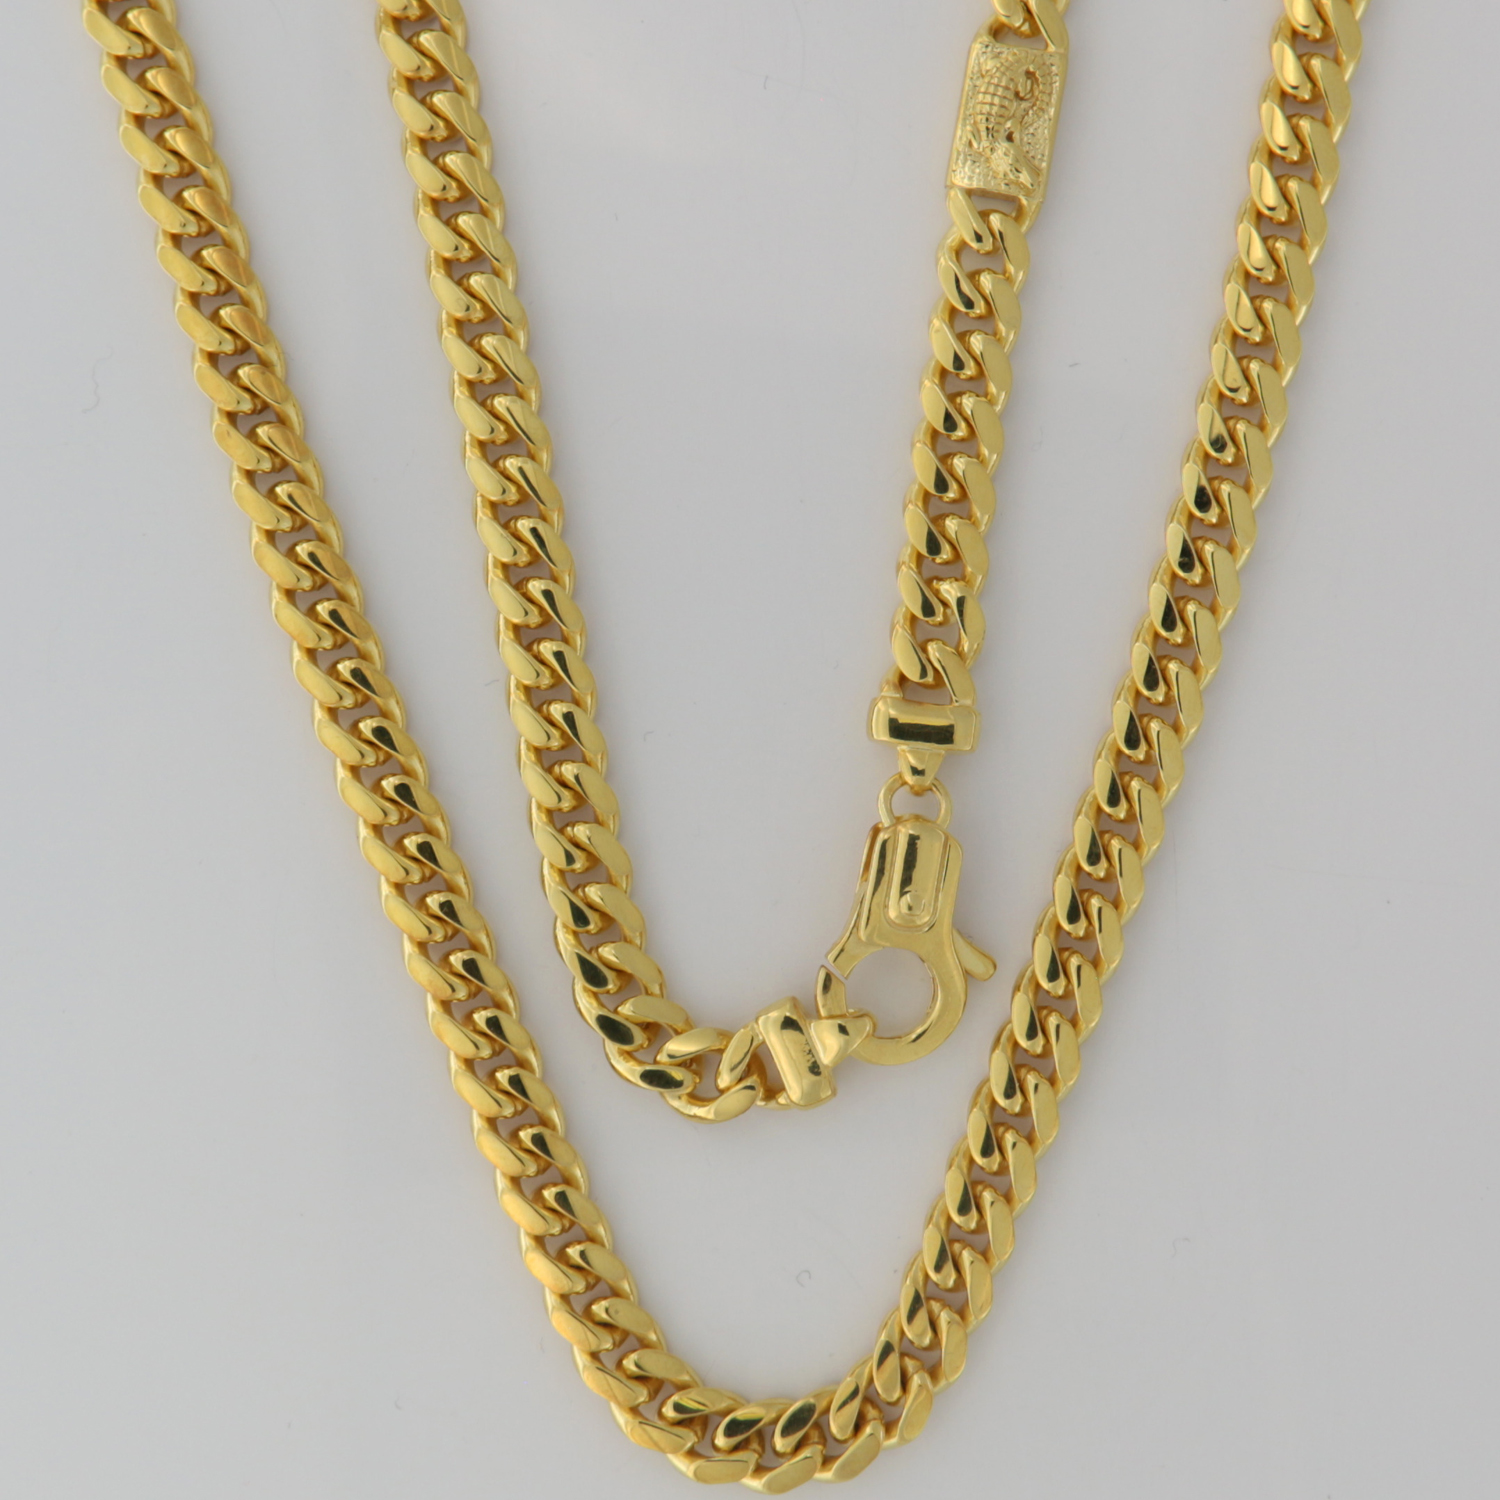 Necklace men's 1 crocodile element gold plated-image